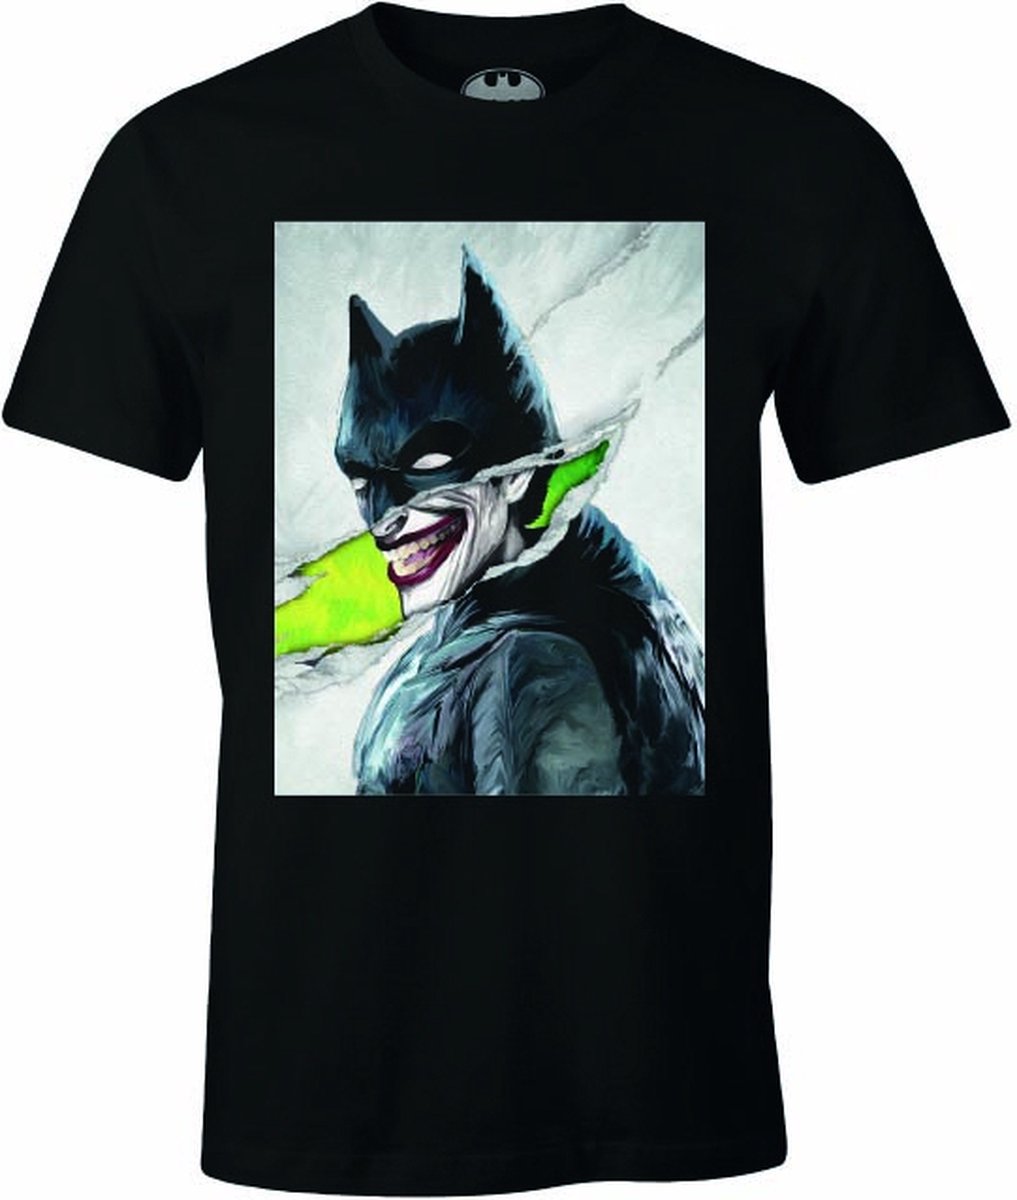 DC Comics - Batman - Black Men's T-shirt - The Joker disguised in Batman - S